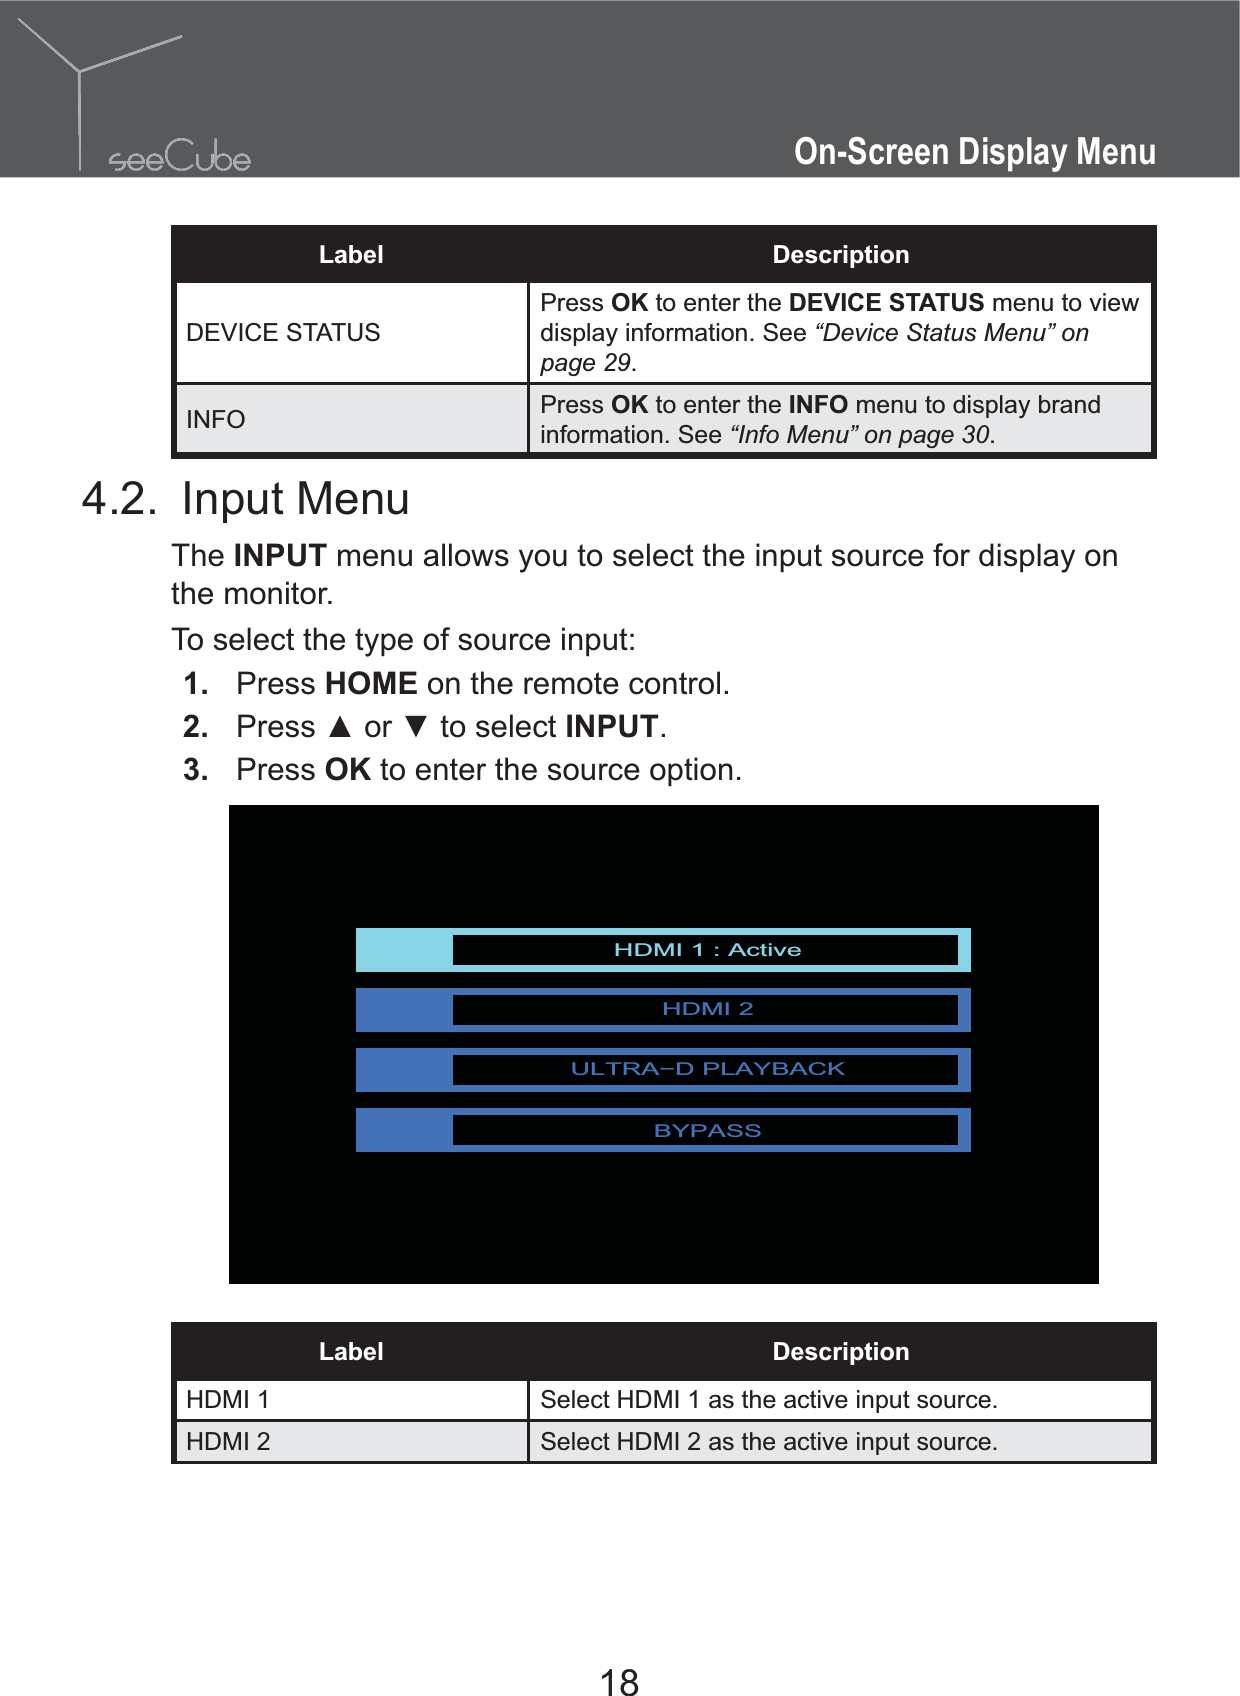 18On-Screen Display MenuLabel DescriptionDEVICE STATUSPress OK to enter the DEVICE STATUS menu to view display information. See “Device Status Menu” on page 29.INFO Press OK to enter the INFO menu to display brand information. See “Info Menu” on page 30.4.2. Input MenuThe INPUT menu allows you to select the input source for display on the monitor.To select the type of source input:1.  Press HOME on the remote control.2.  INPUT.3.  Press OK to enter the source option.HDMI 1 : ActiveHDMI 2ULTRA−D PLAYBACKBYPASSLabel DescriptionHDMI 1 Select HDMI 1 as the active input source.HDMI 2 Select HDMI 2 as the active input source.